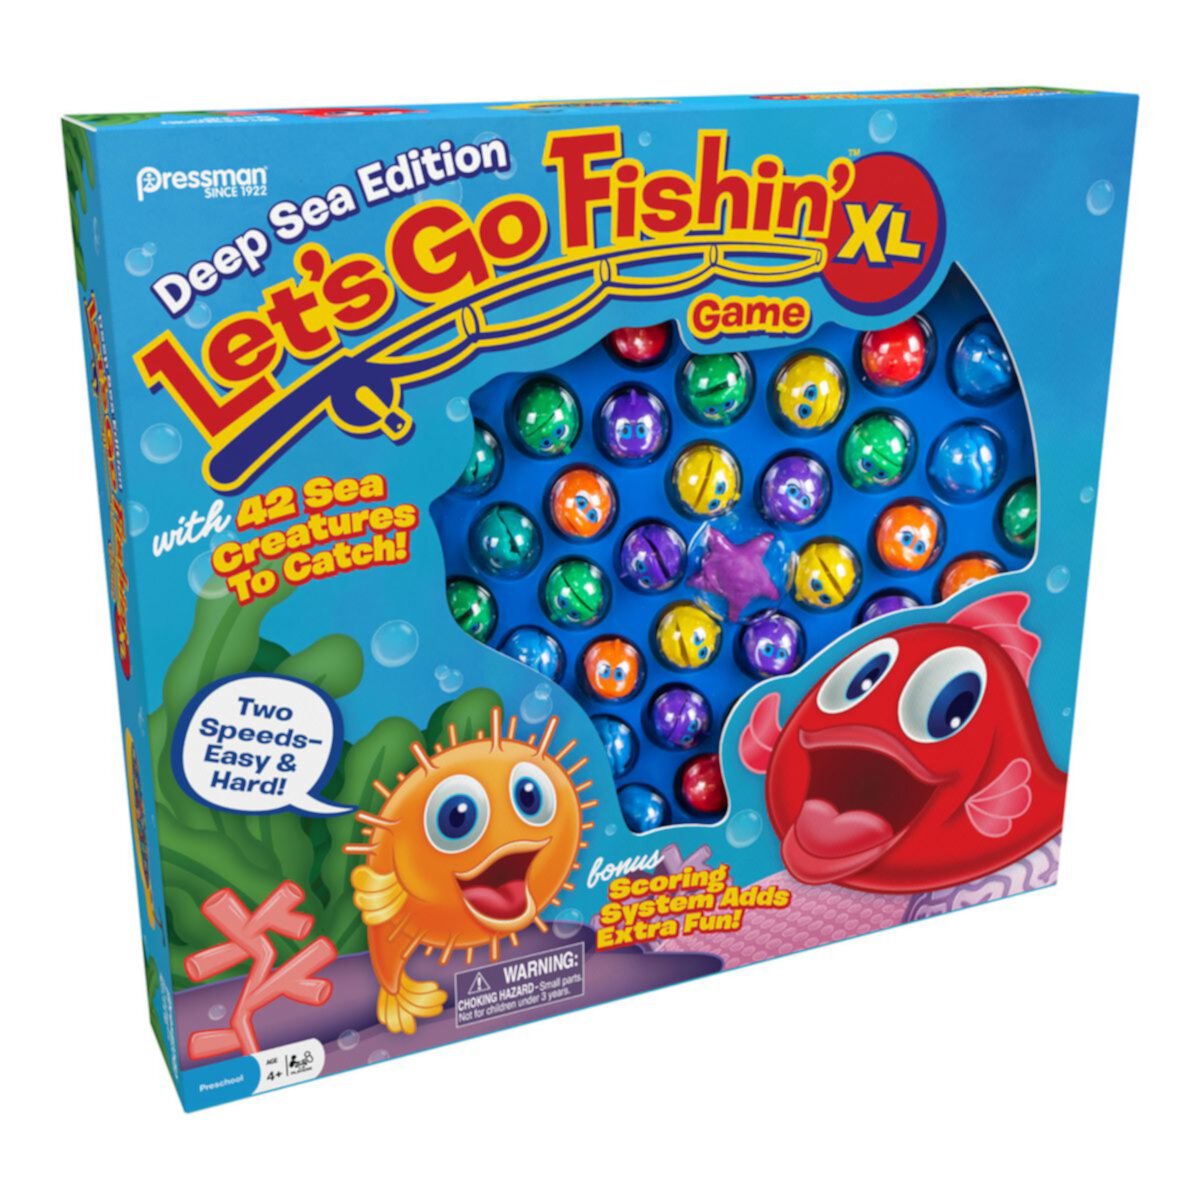 Pressman Let's Go Fishin 'XL: Deep Sea Edition Детская игра Pressman Toy